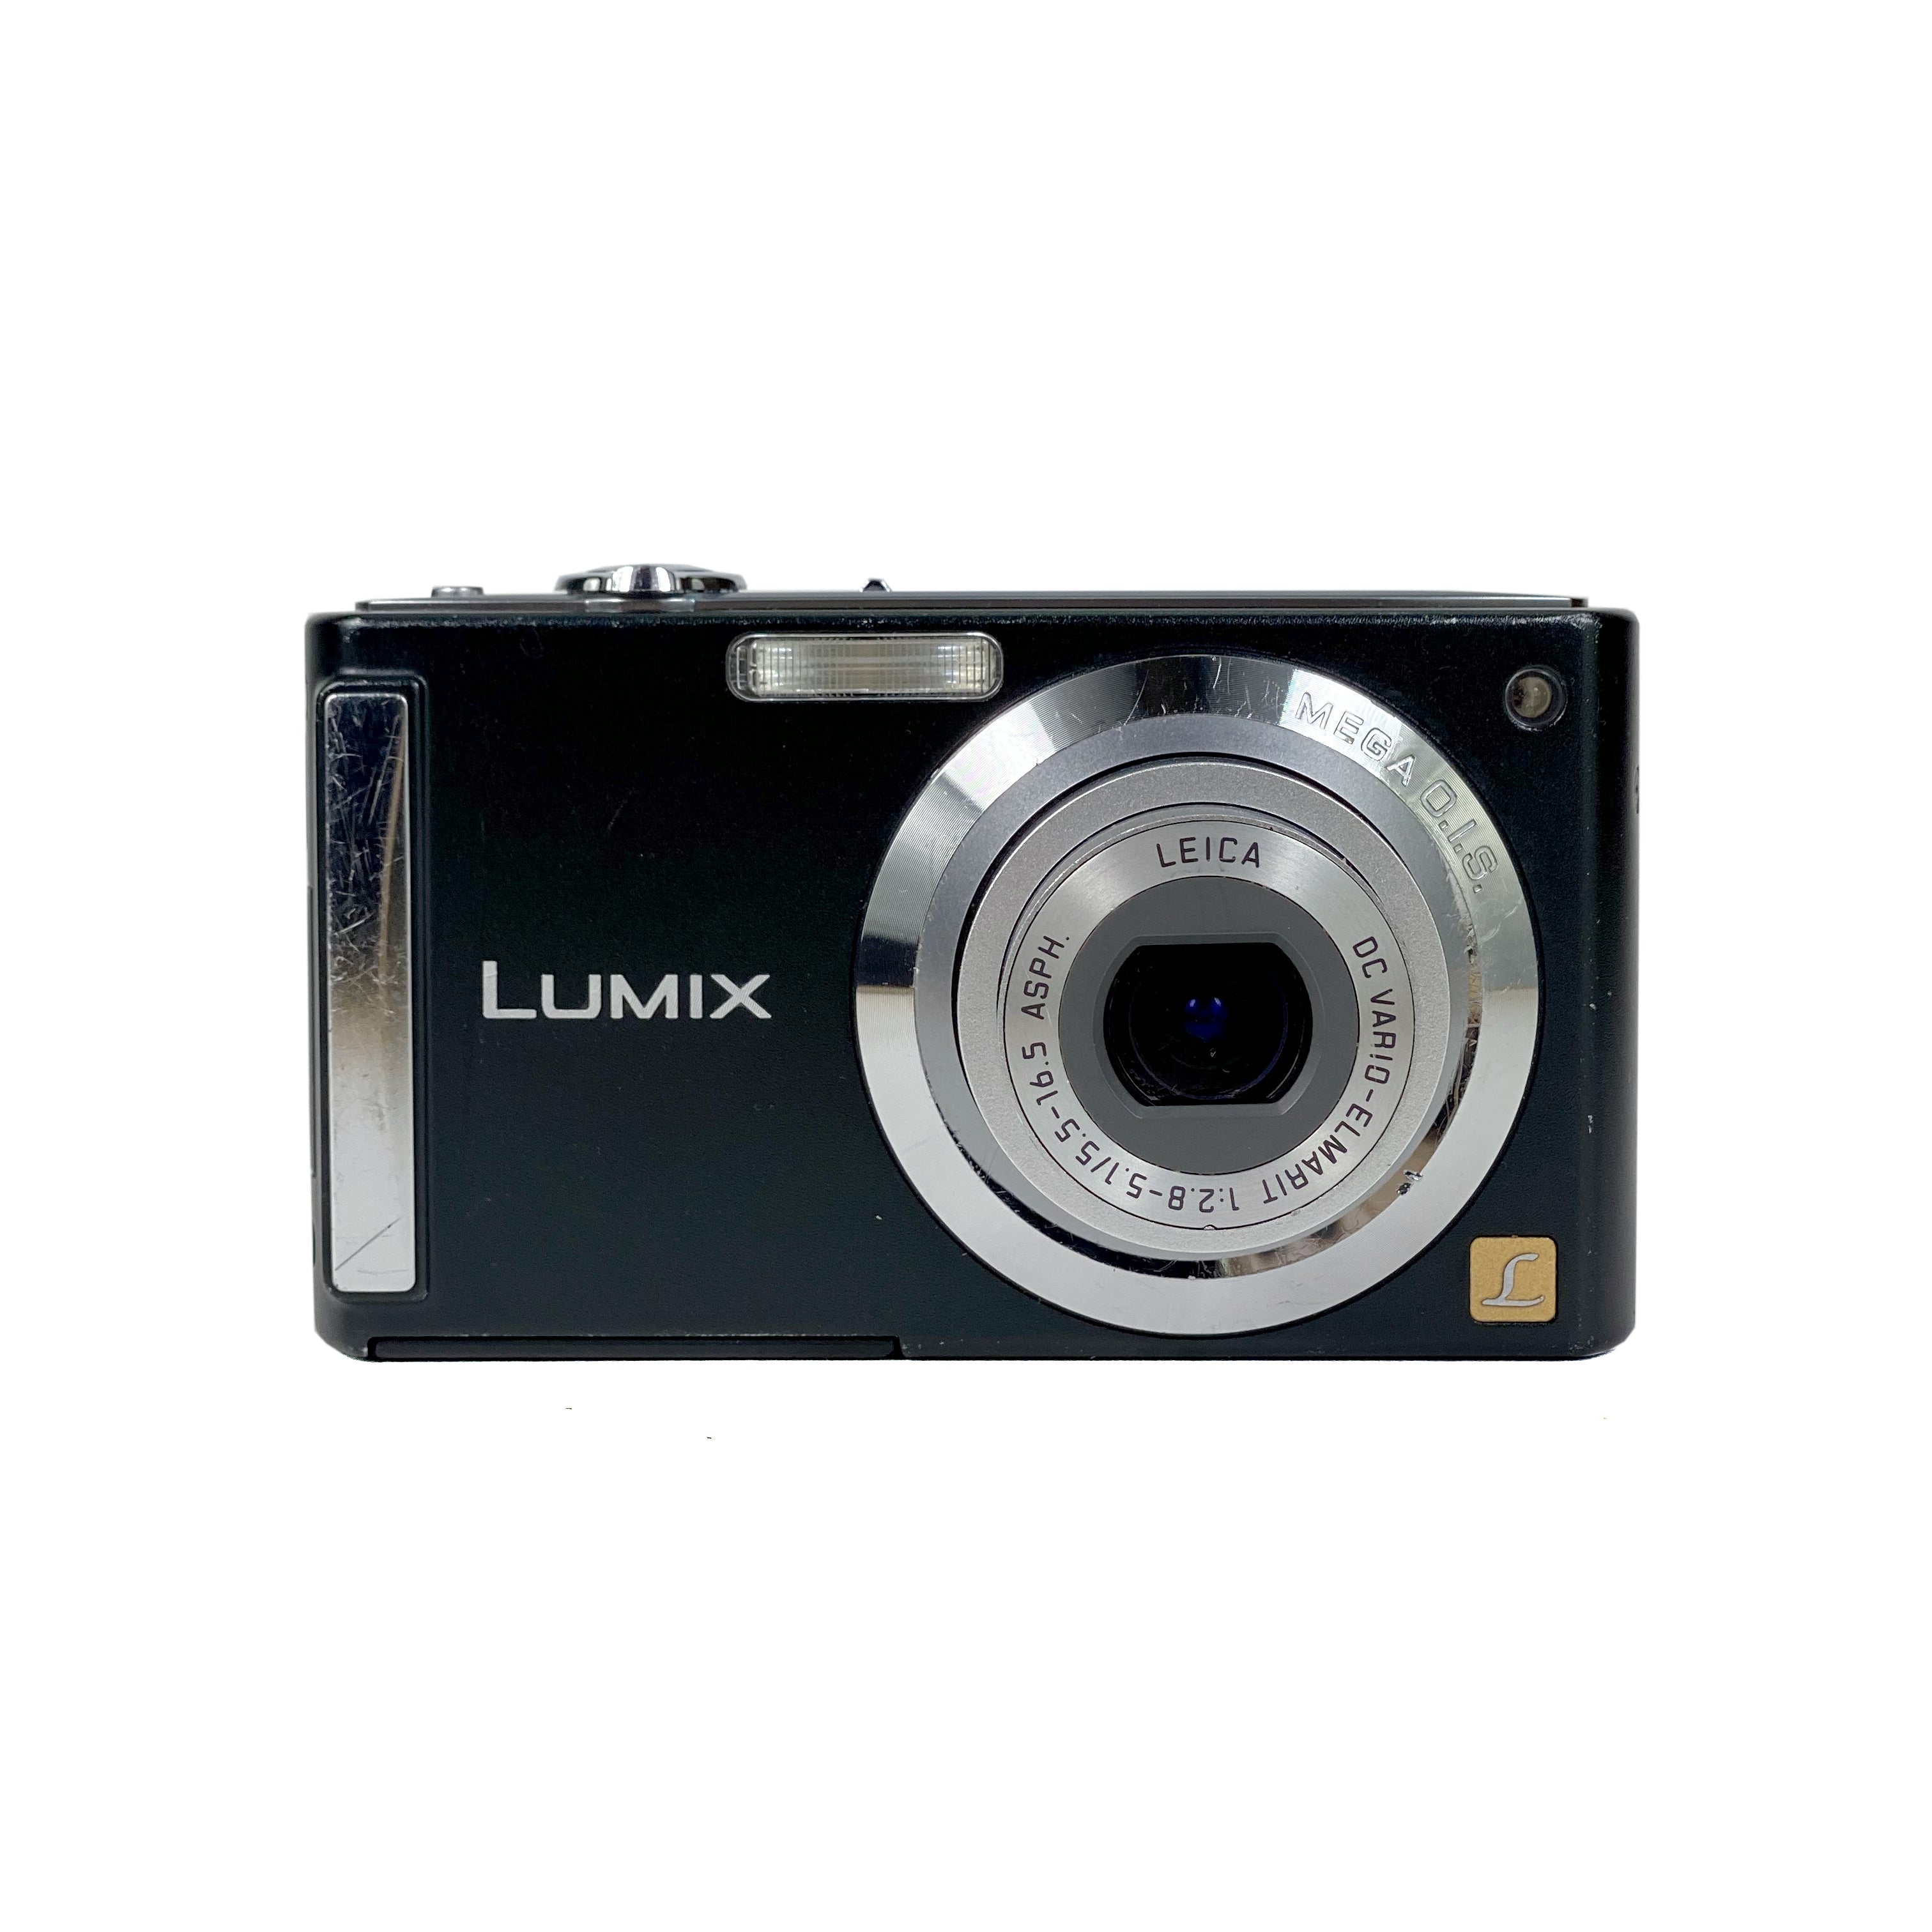 Panasonic Lumix DMC-FS3 Digital Compact